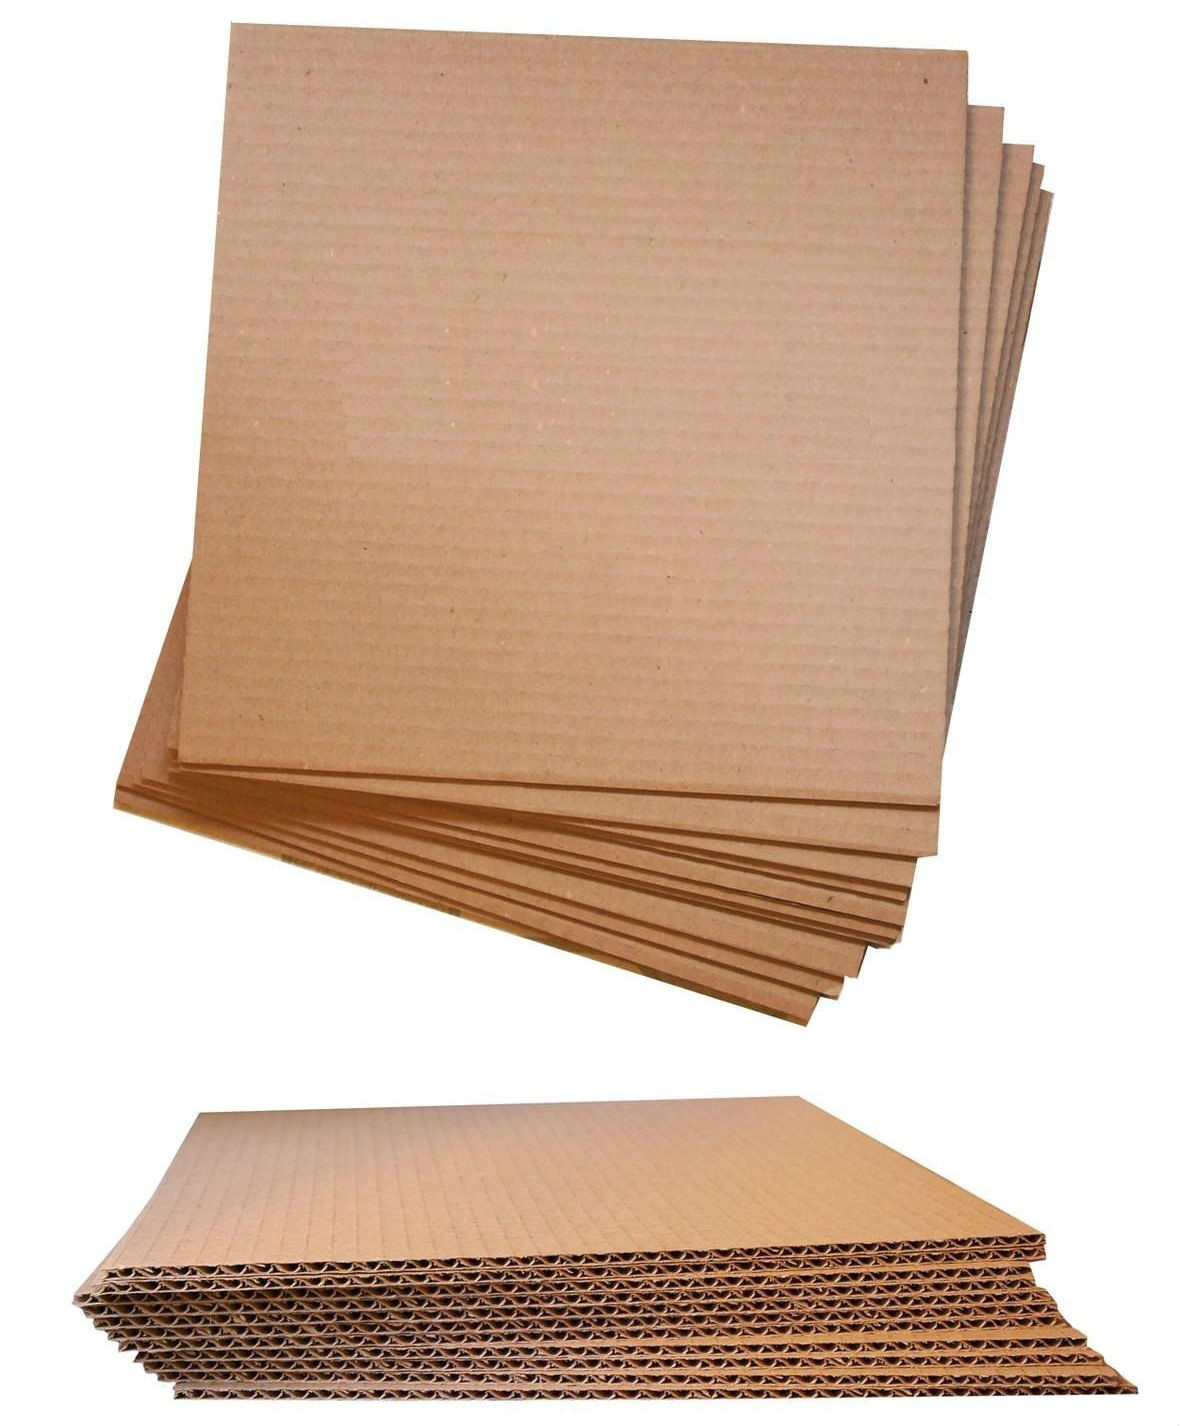 Corrugated Cardboard Layer Pad Insert